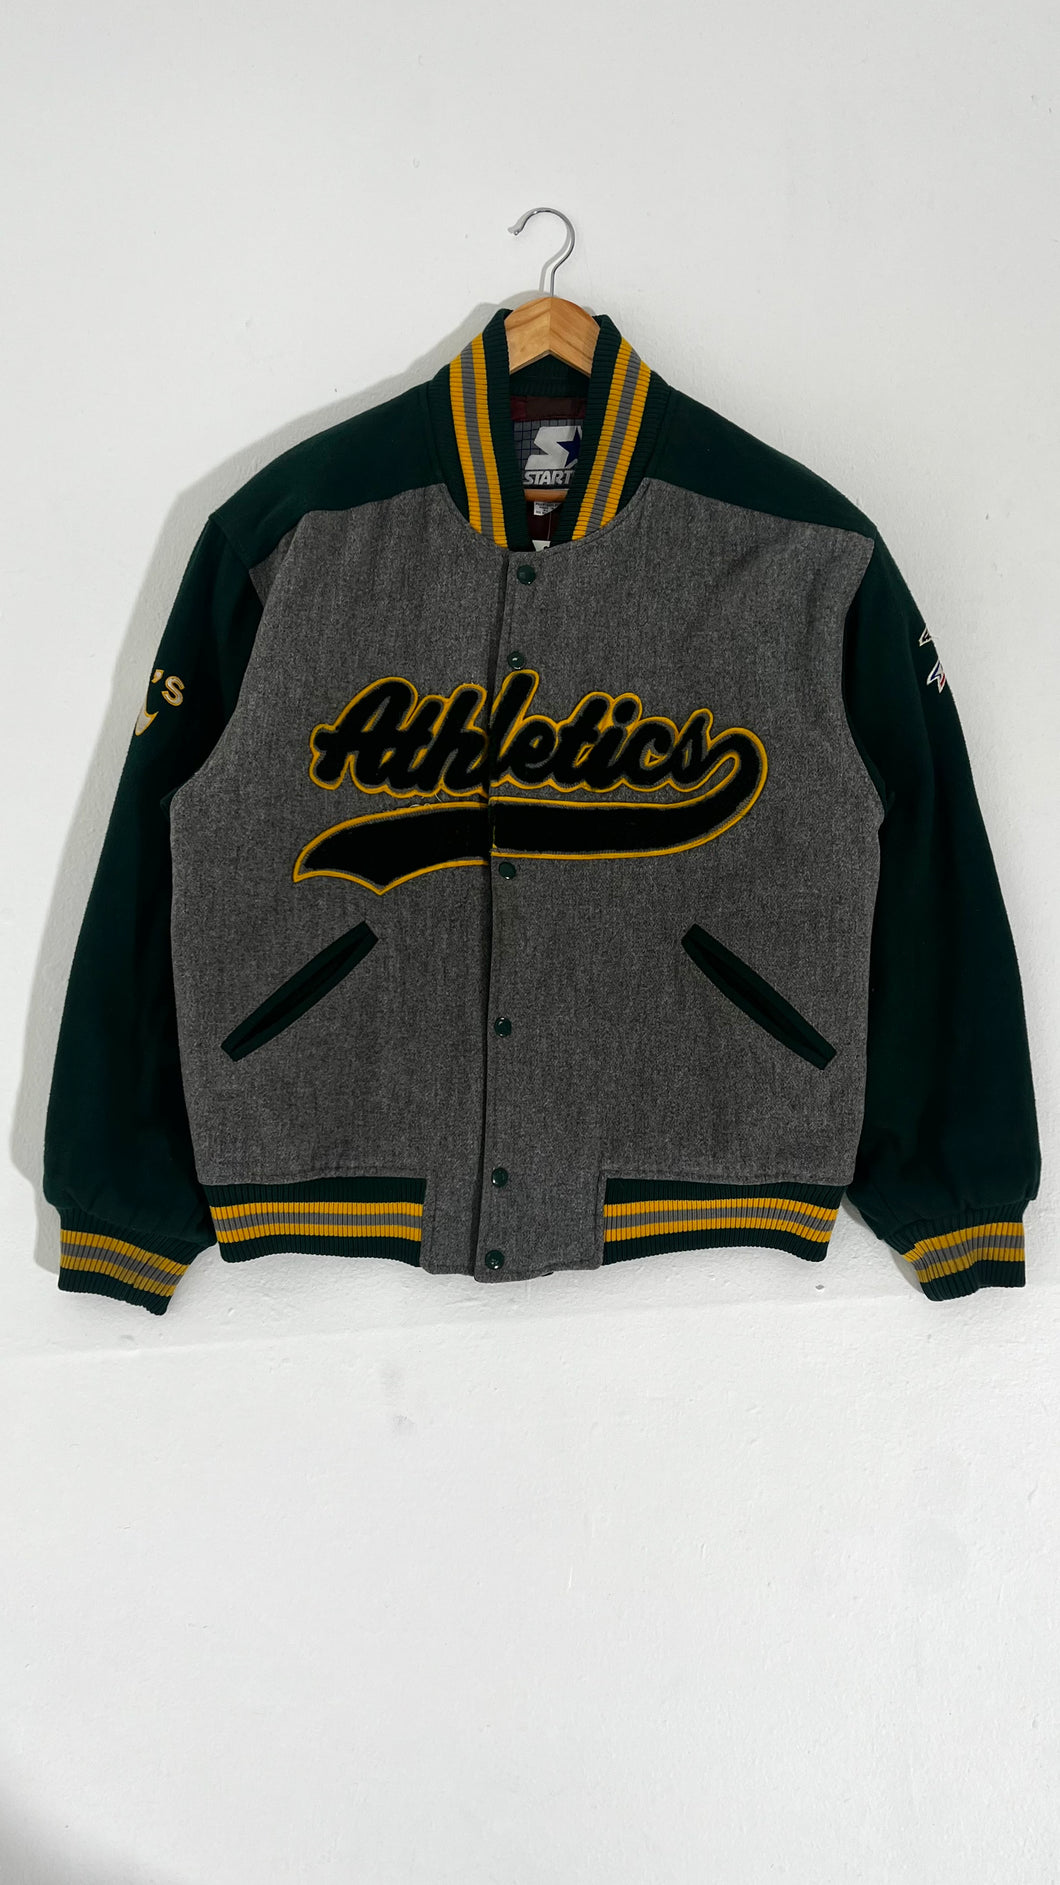 Oakland Athletics Sweatshirts in Oakland Athletics Team Shop